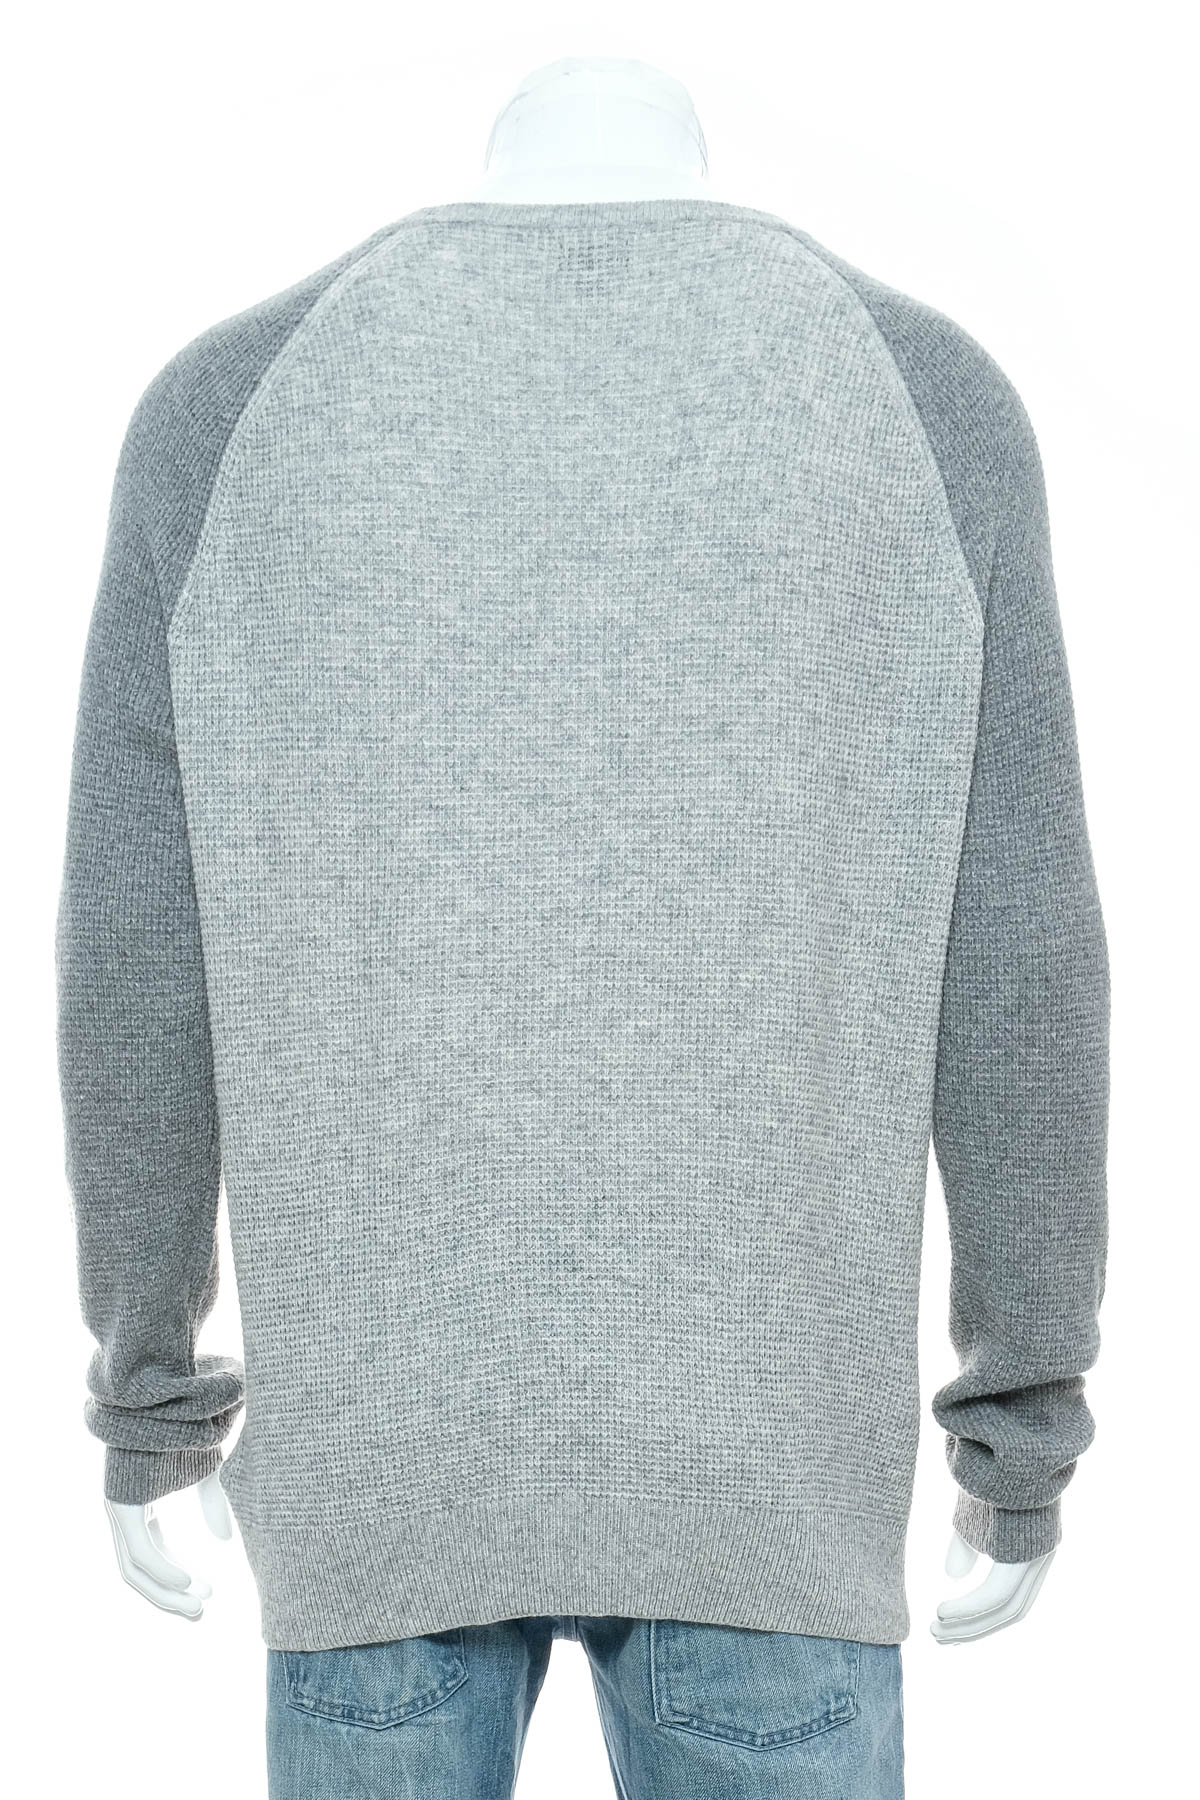 Men's sweater - J.CREW - 1